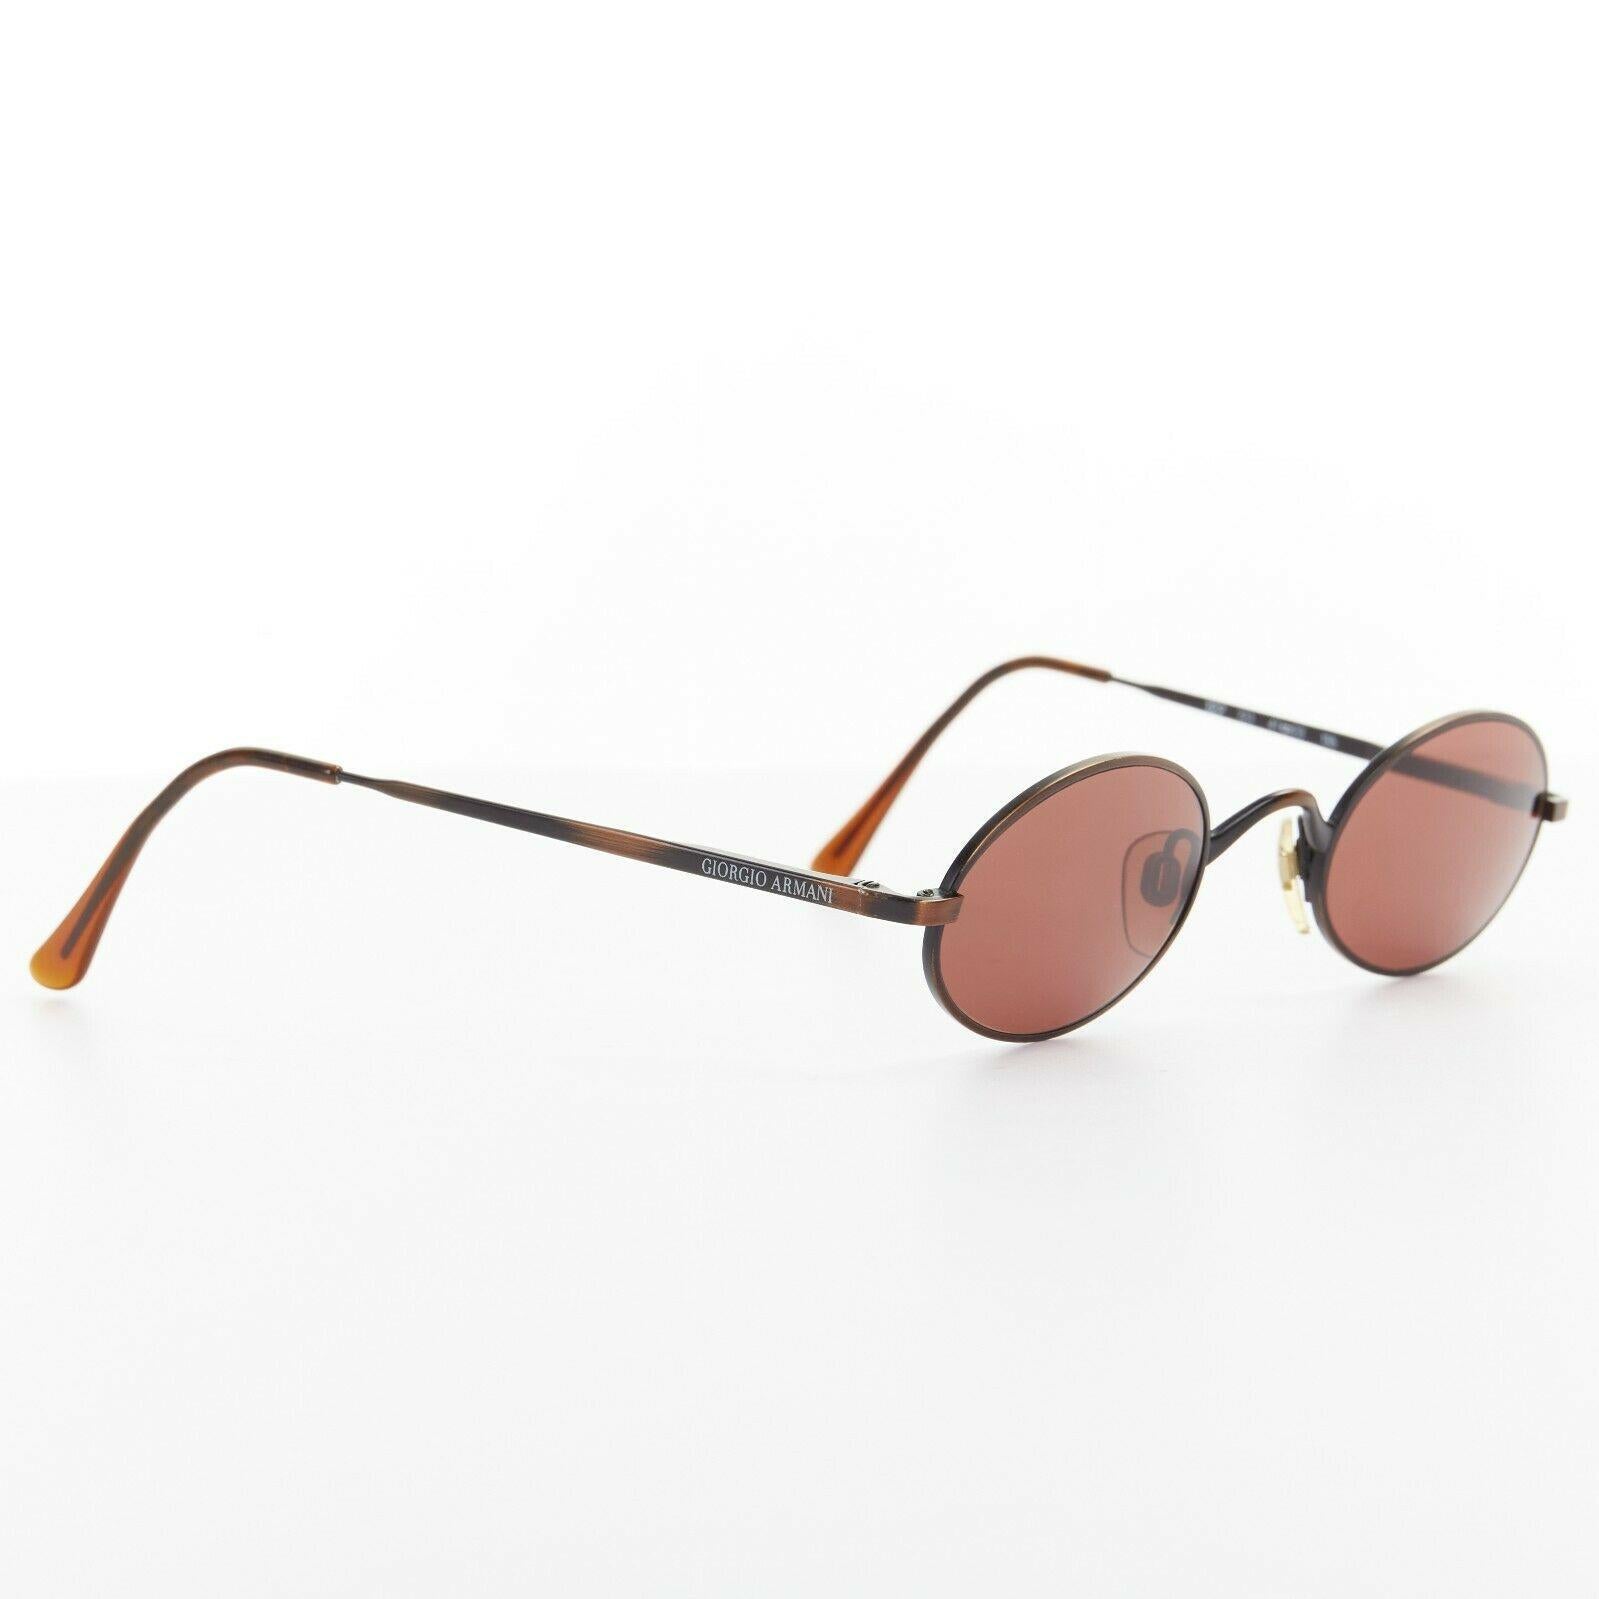 Brown GIORGIO ARMANI dark brown lens metal frame 90's style tiny sunglasses